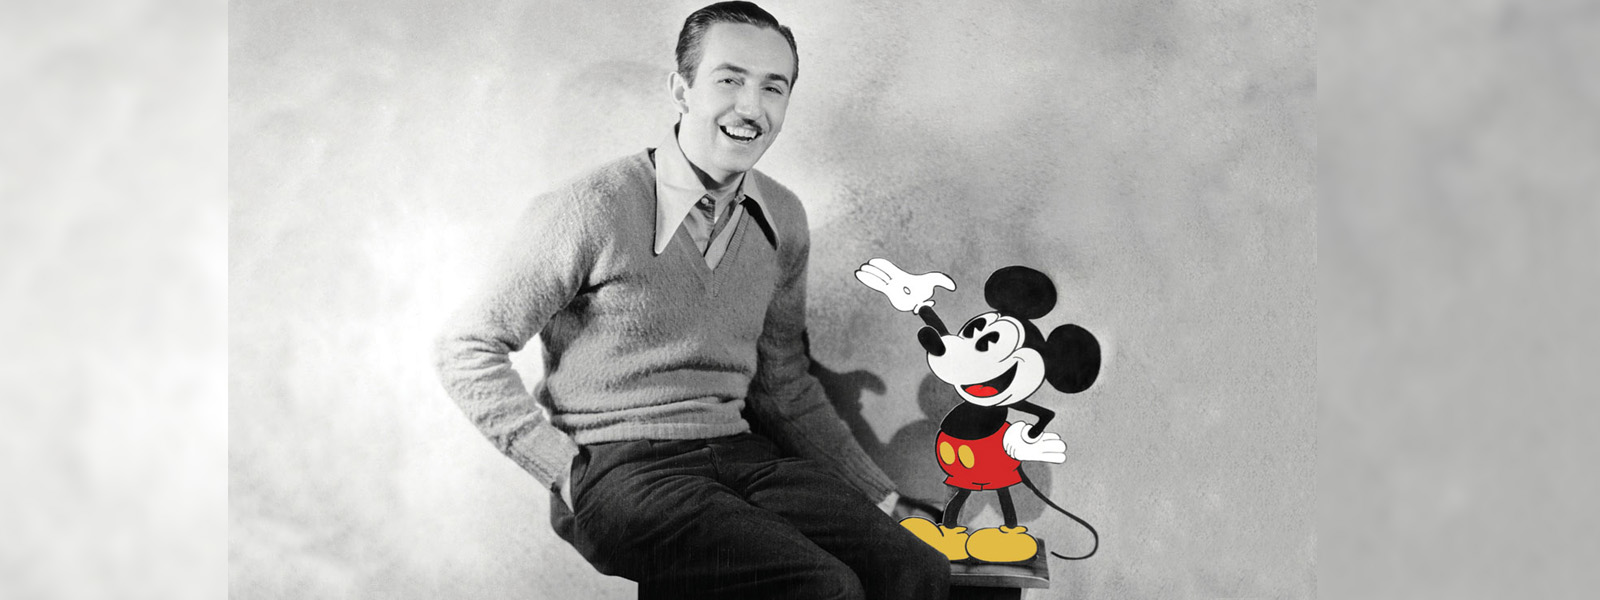 Happy Birthday Mickey! 90 years of Mickey Mouse